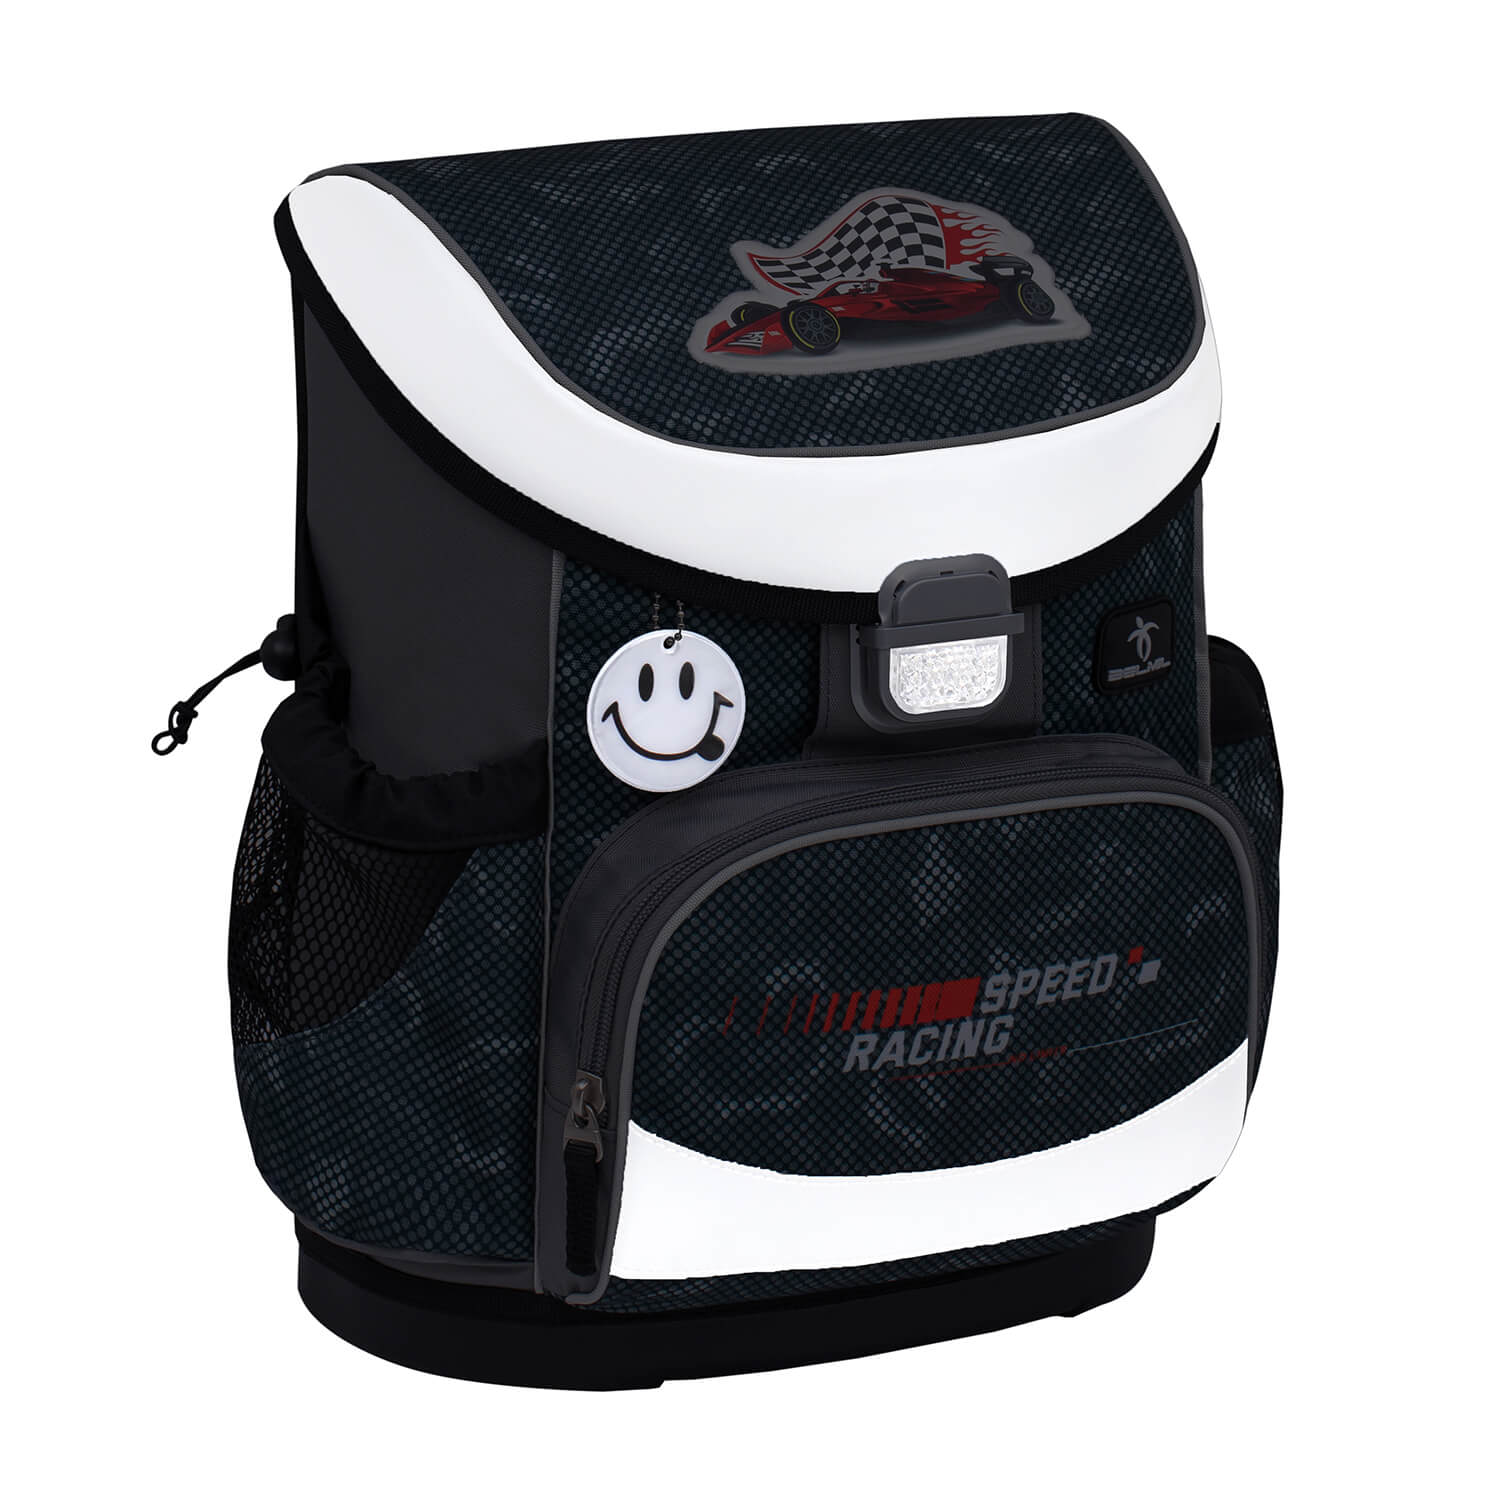 Mini-Fit Red Dots schoolbag set 5 pcs with GRATIS keychain